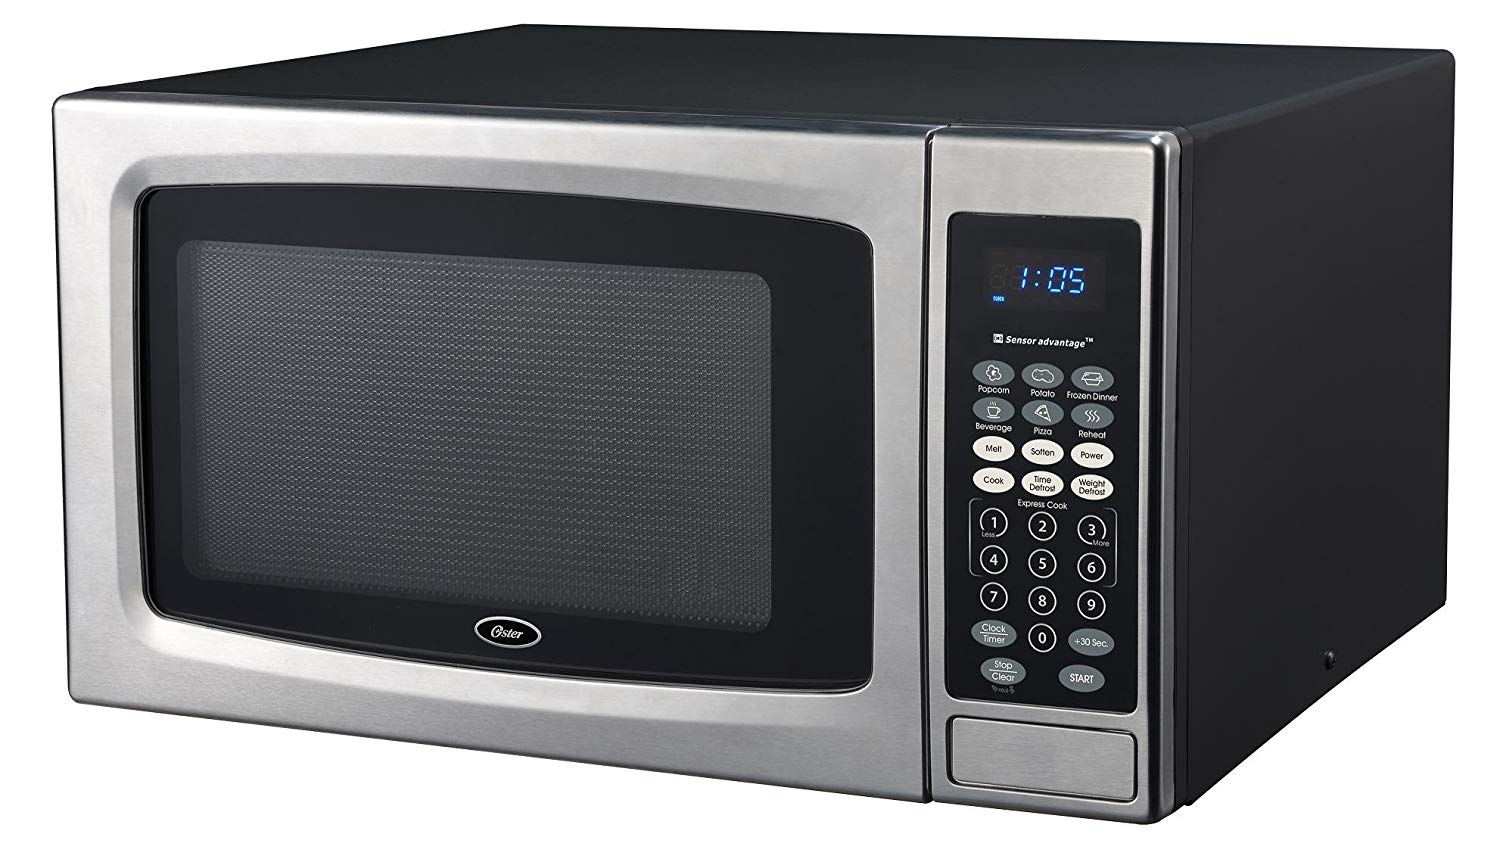 Oster OGZE1304S 1100W Sensor Microwave Oven, 1.3 cu. ft, Stainless Steel/Black